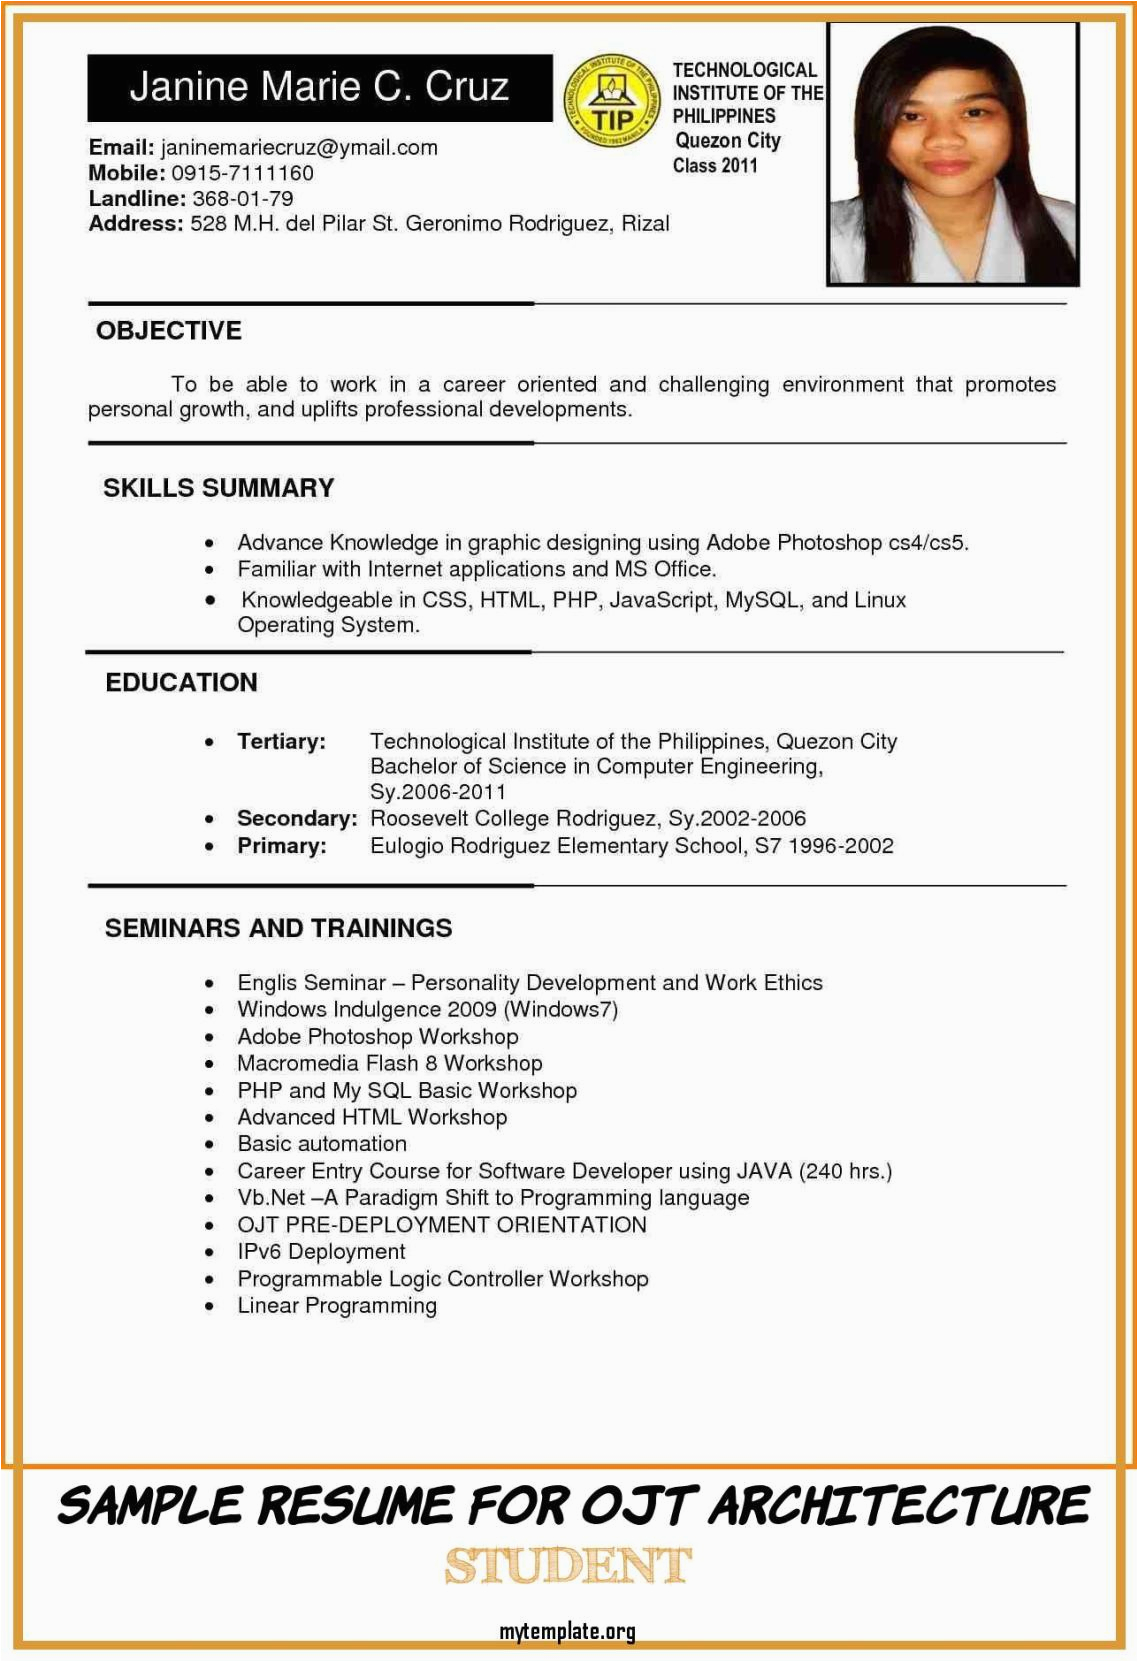 Sample Resume for Ojt Students Job Training Sample Resume for Ojt Architecture Student Resume